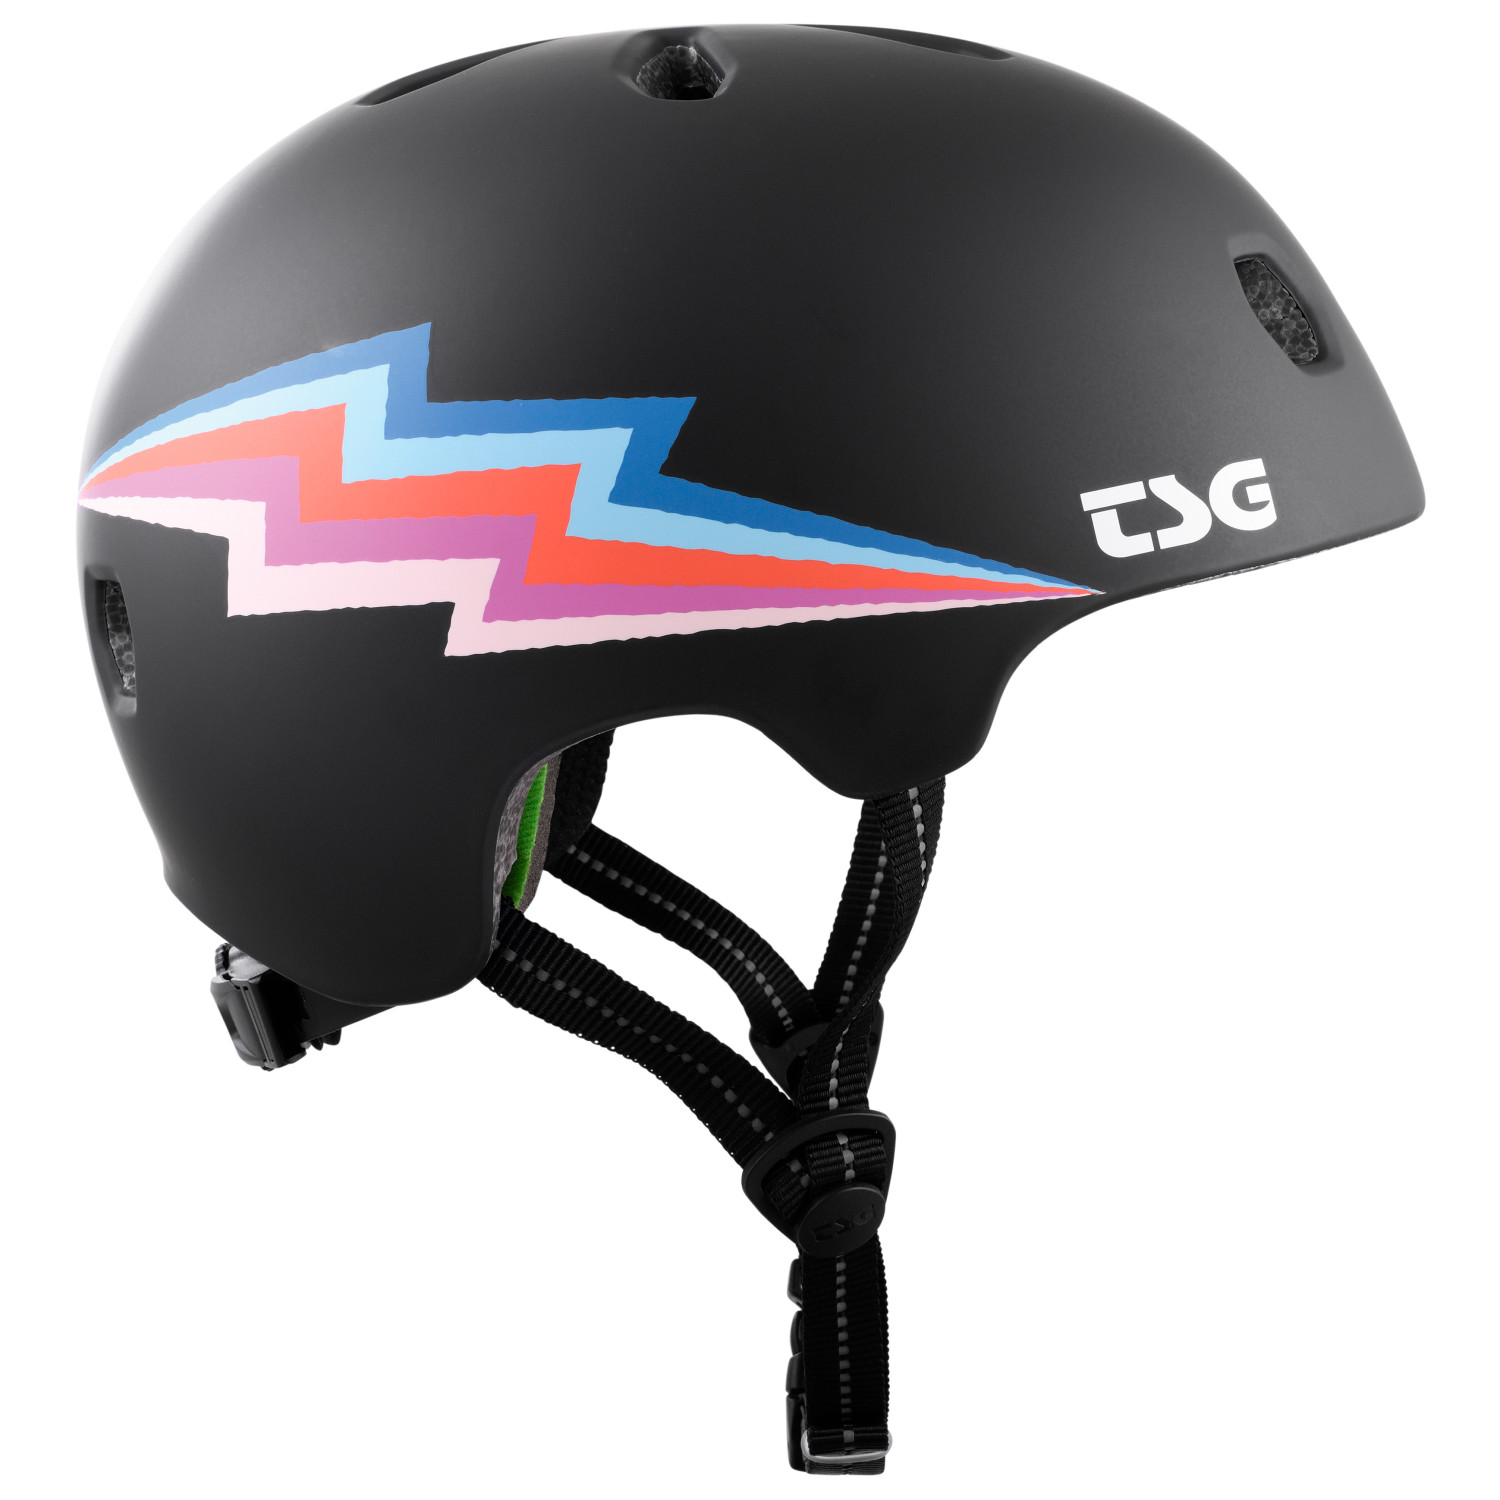 Велосипедный шлем Tsg Kid's Meta Graphic Design, цвет Thunderbolt